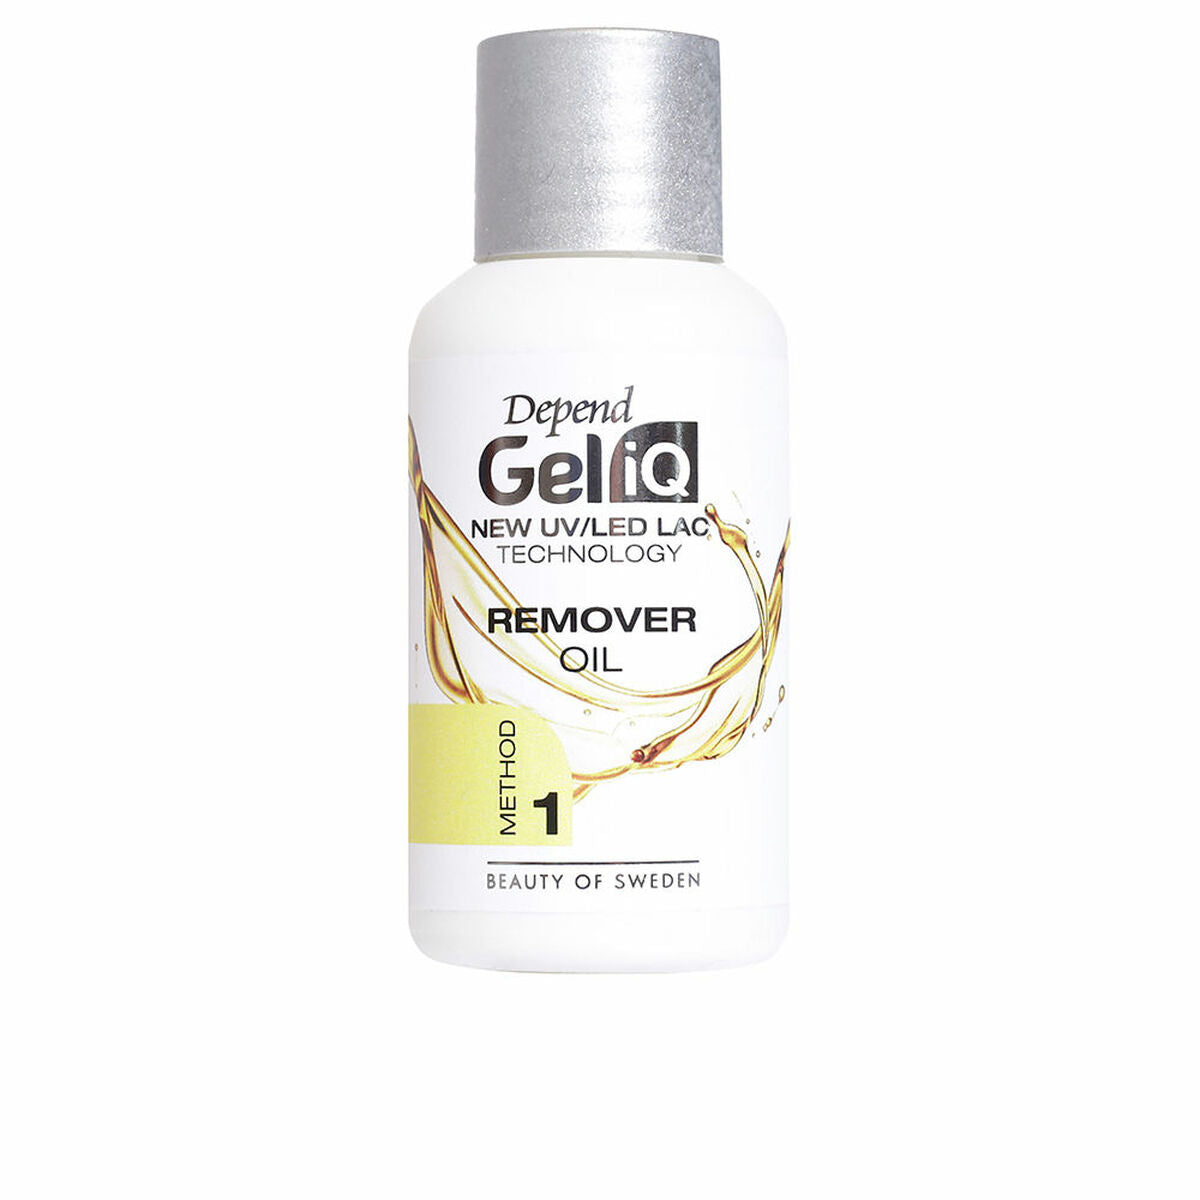 Nagellackentherover -Gel -IQ -Gel (35 ml)